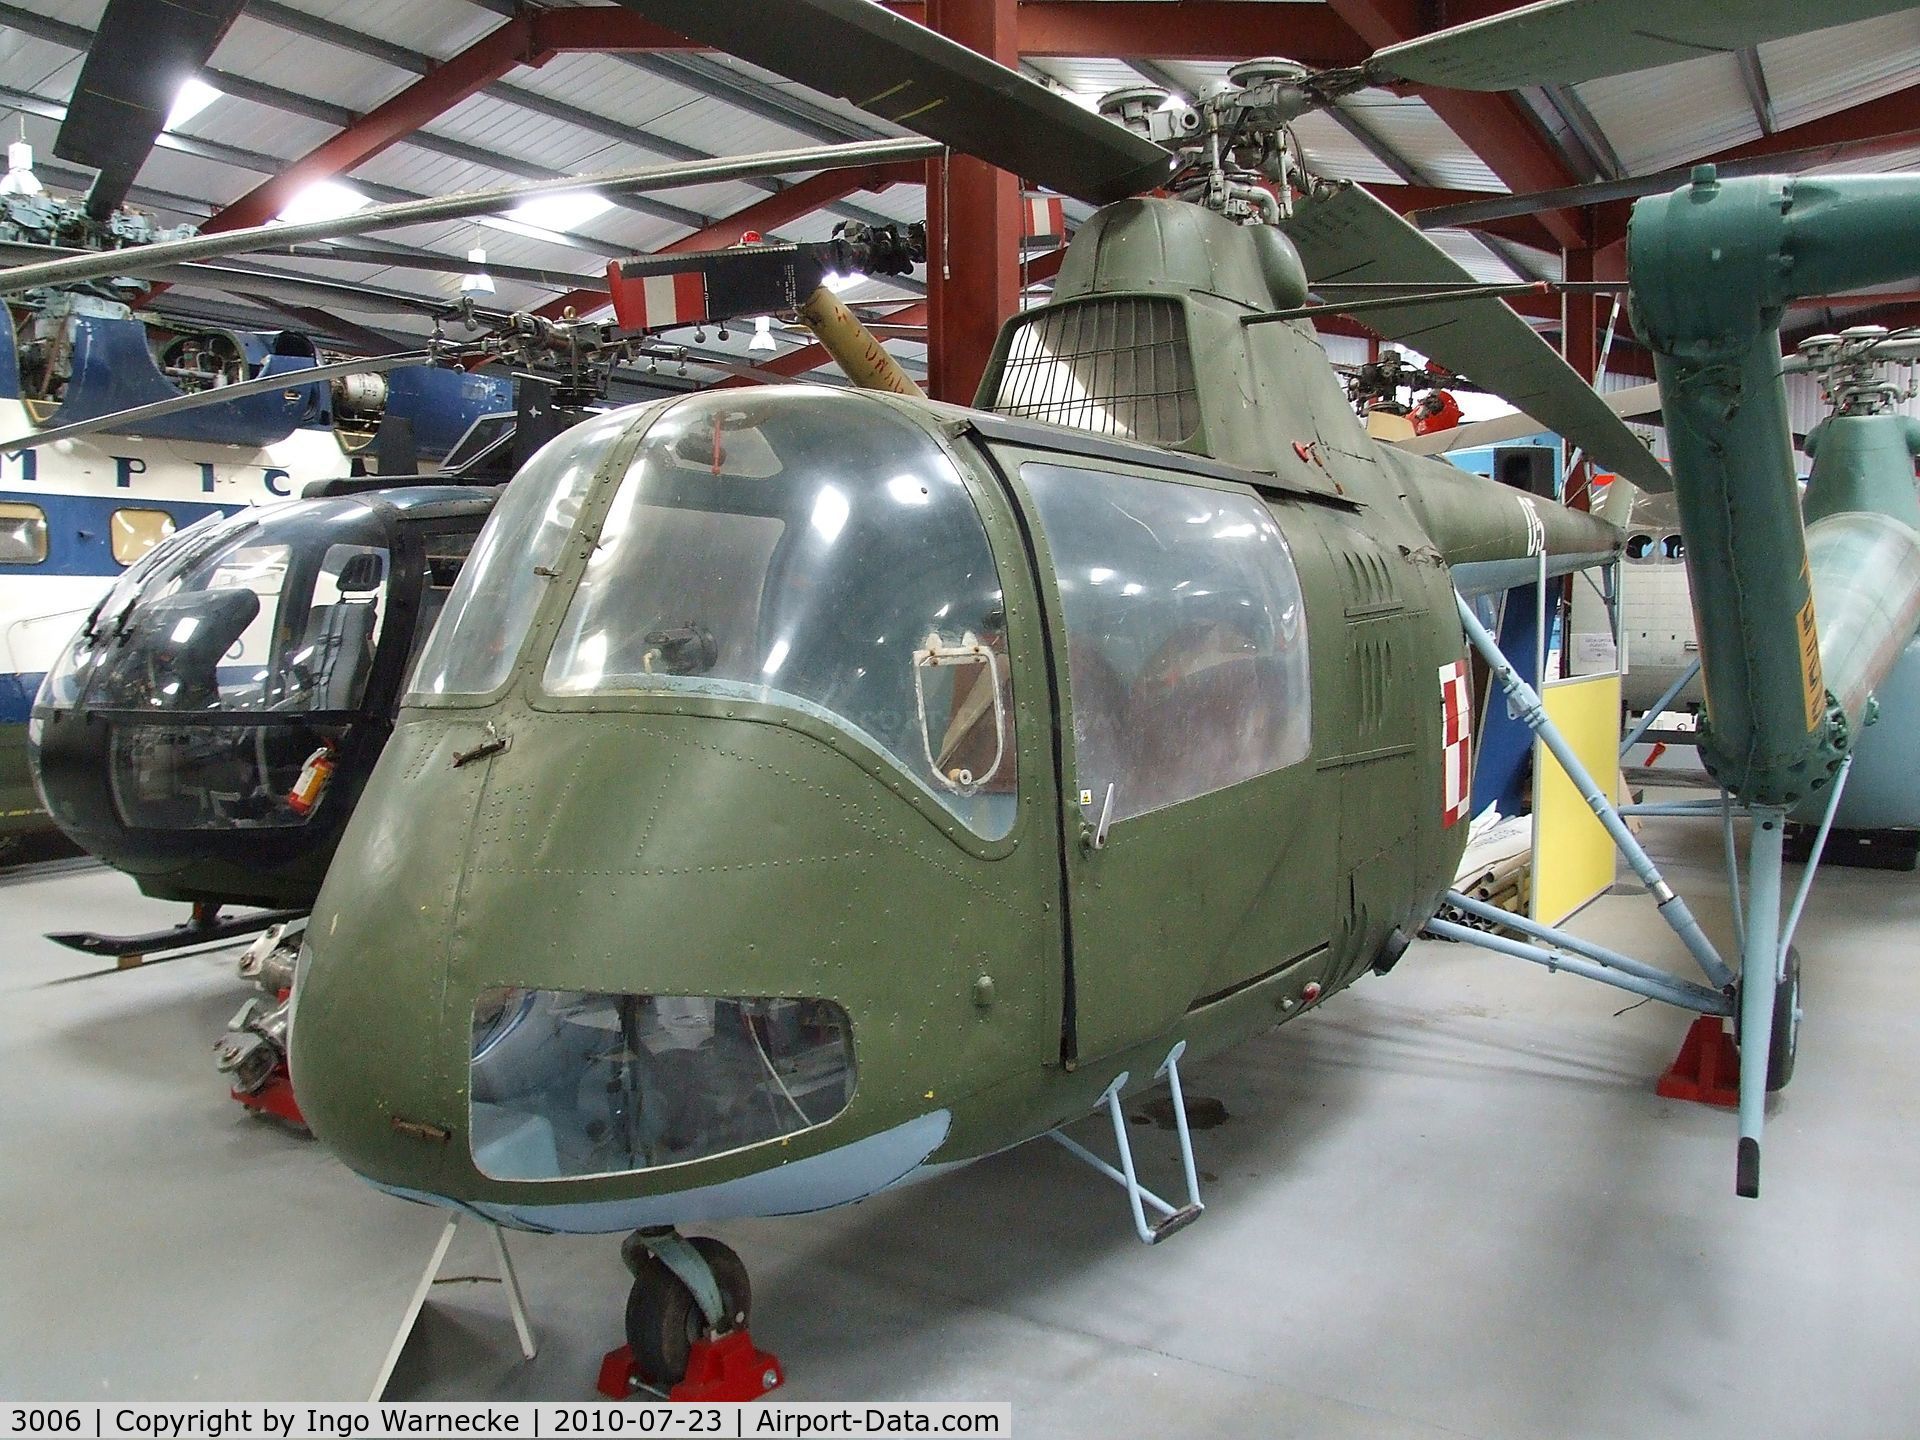 3006, 1961 PZL-Swidnik SM-2 C/N S2-03006, WSK Swidnik SM-2 at the Helicopter Museum, Weston-super-Mare